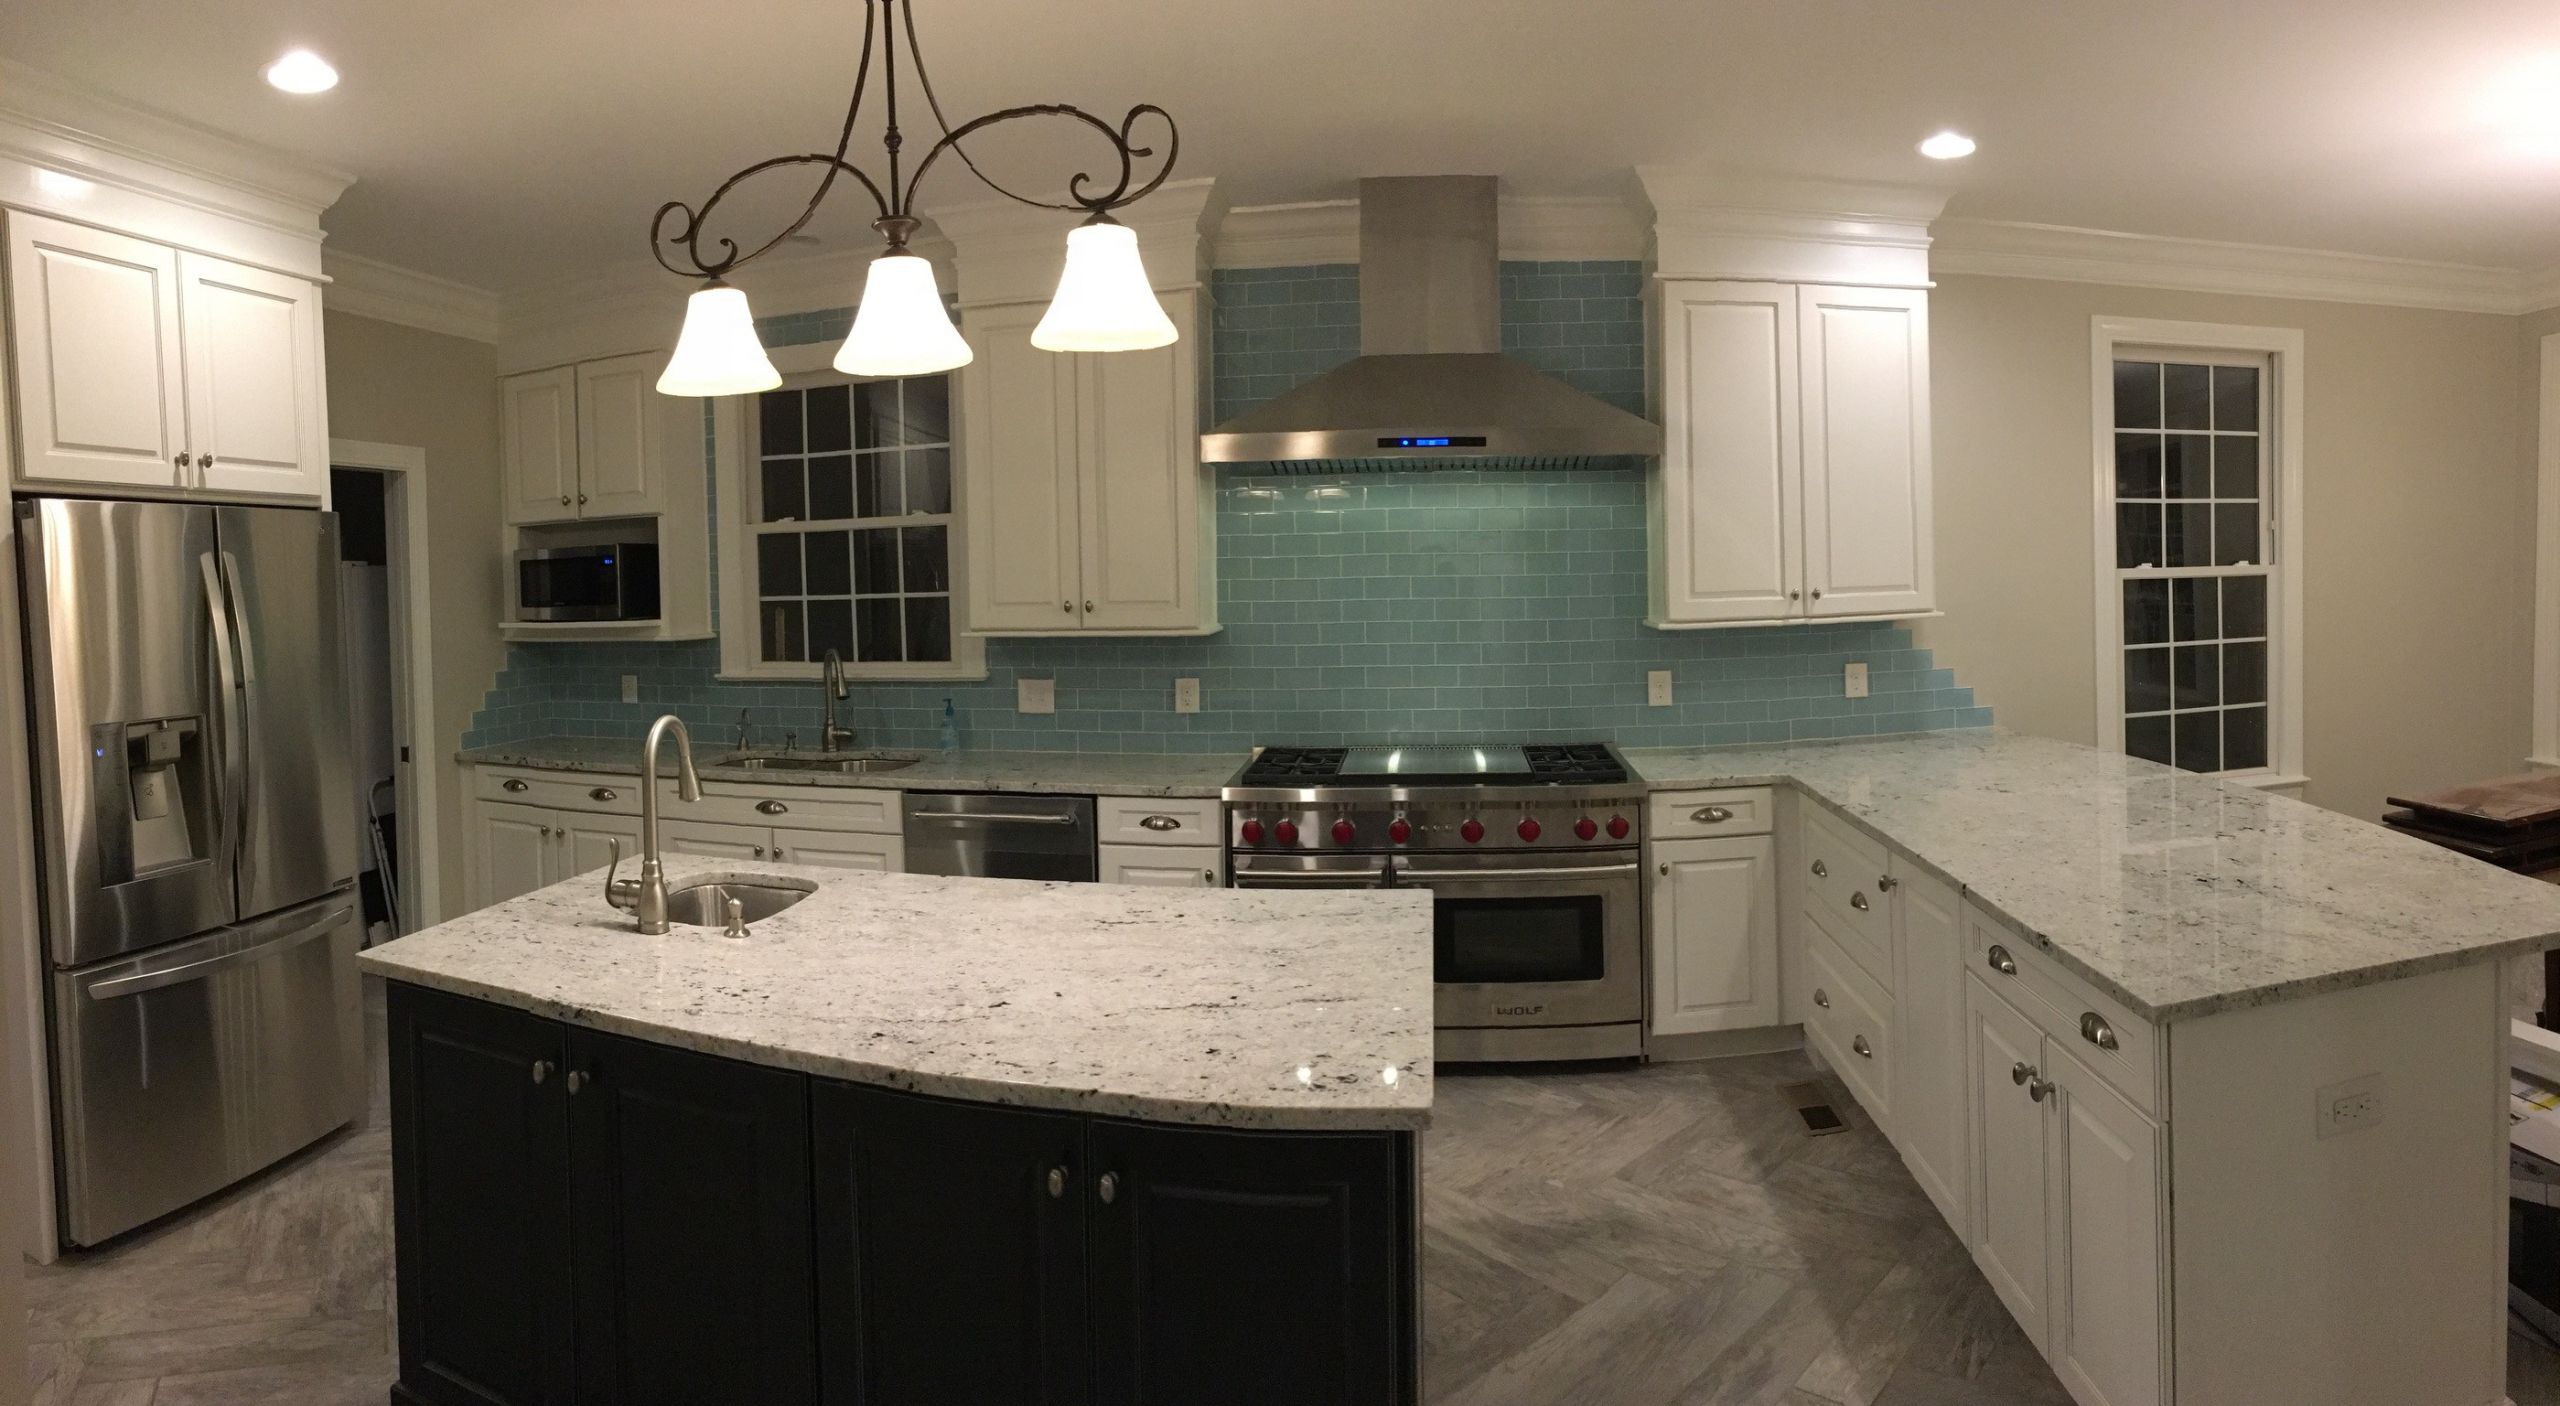 Examples Of Kitchen Backsplashes
 What Size Subway Tile For Kitchen Backsplash Design